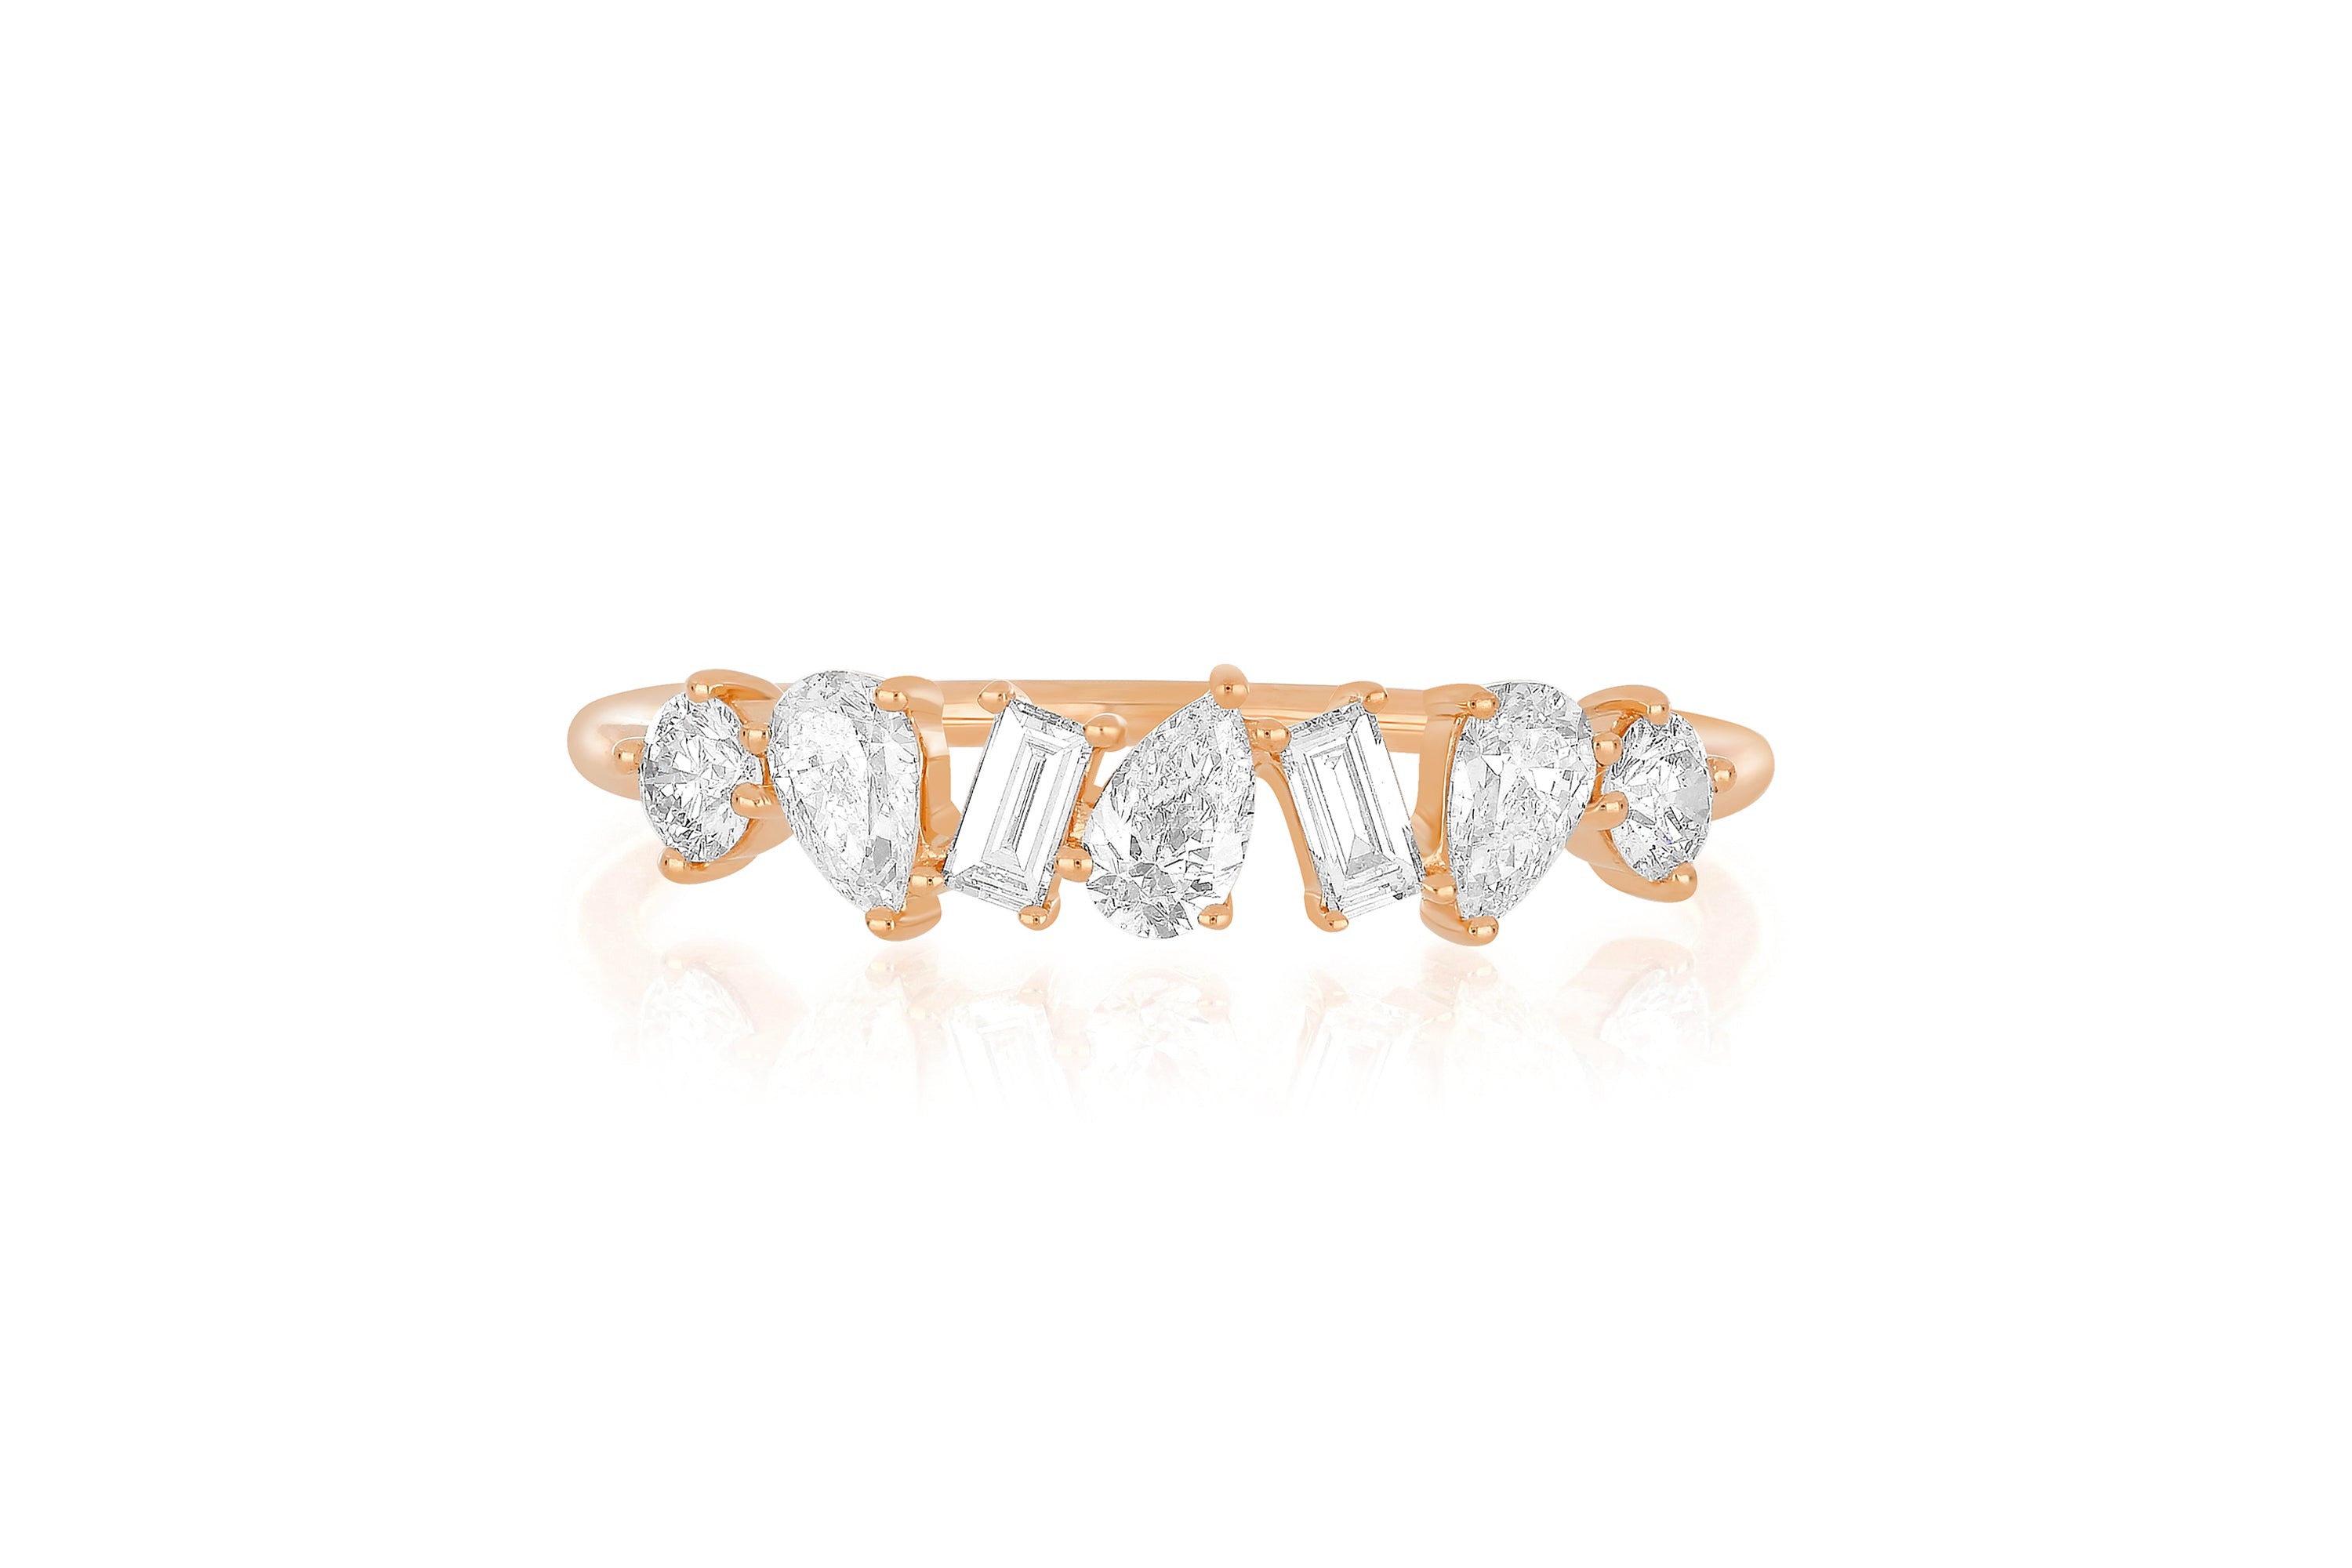 Jumbo Multi Faceted Diamond Ring in rose gold